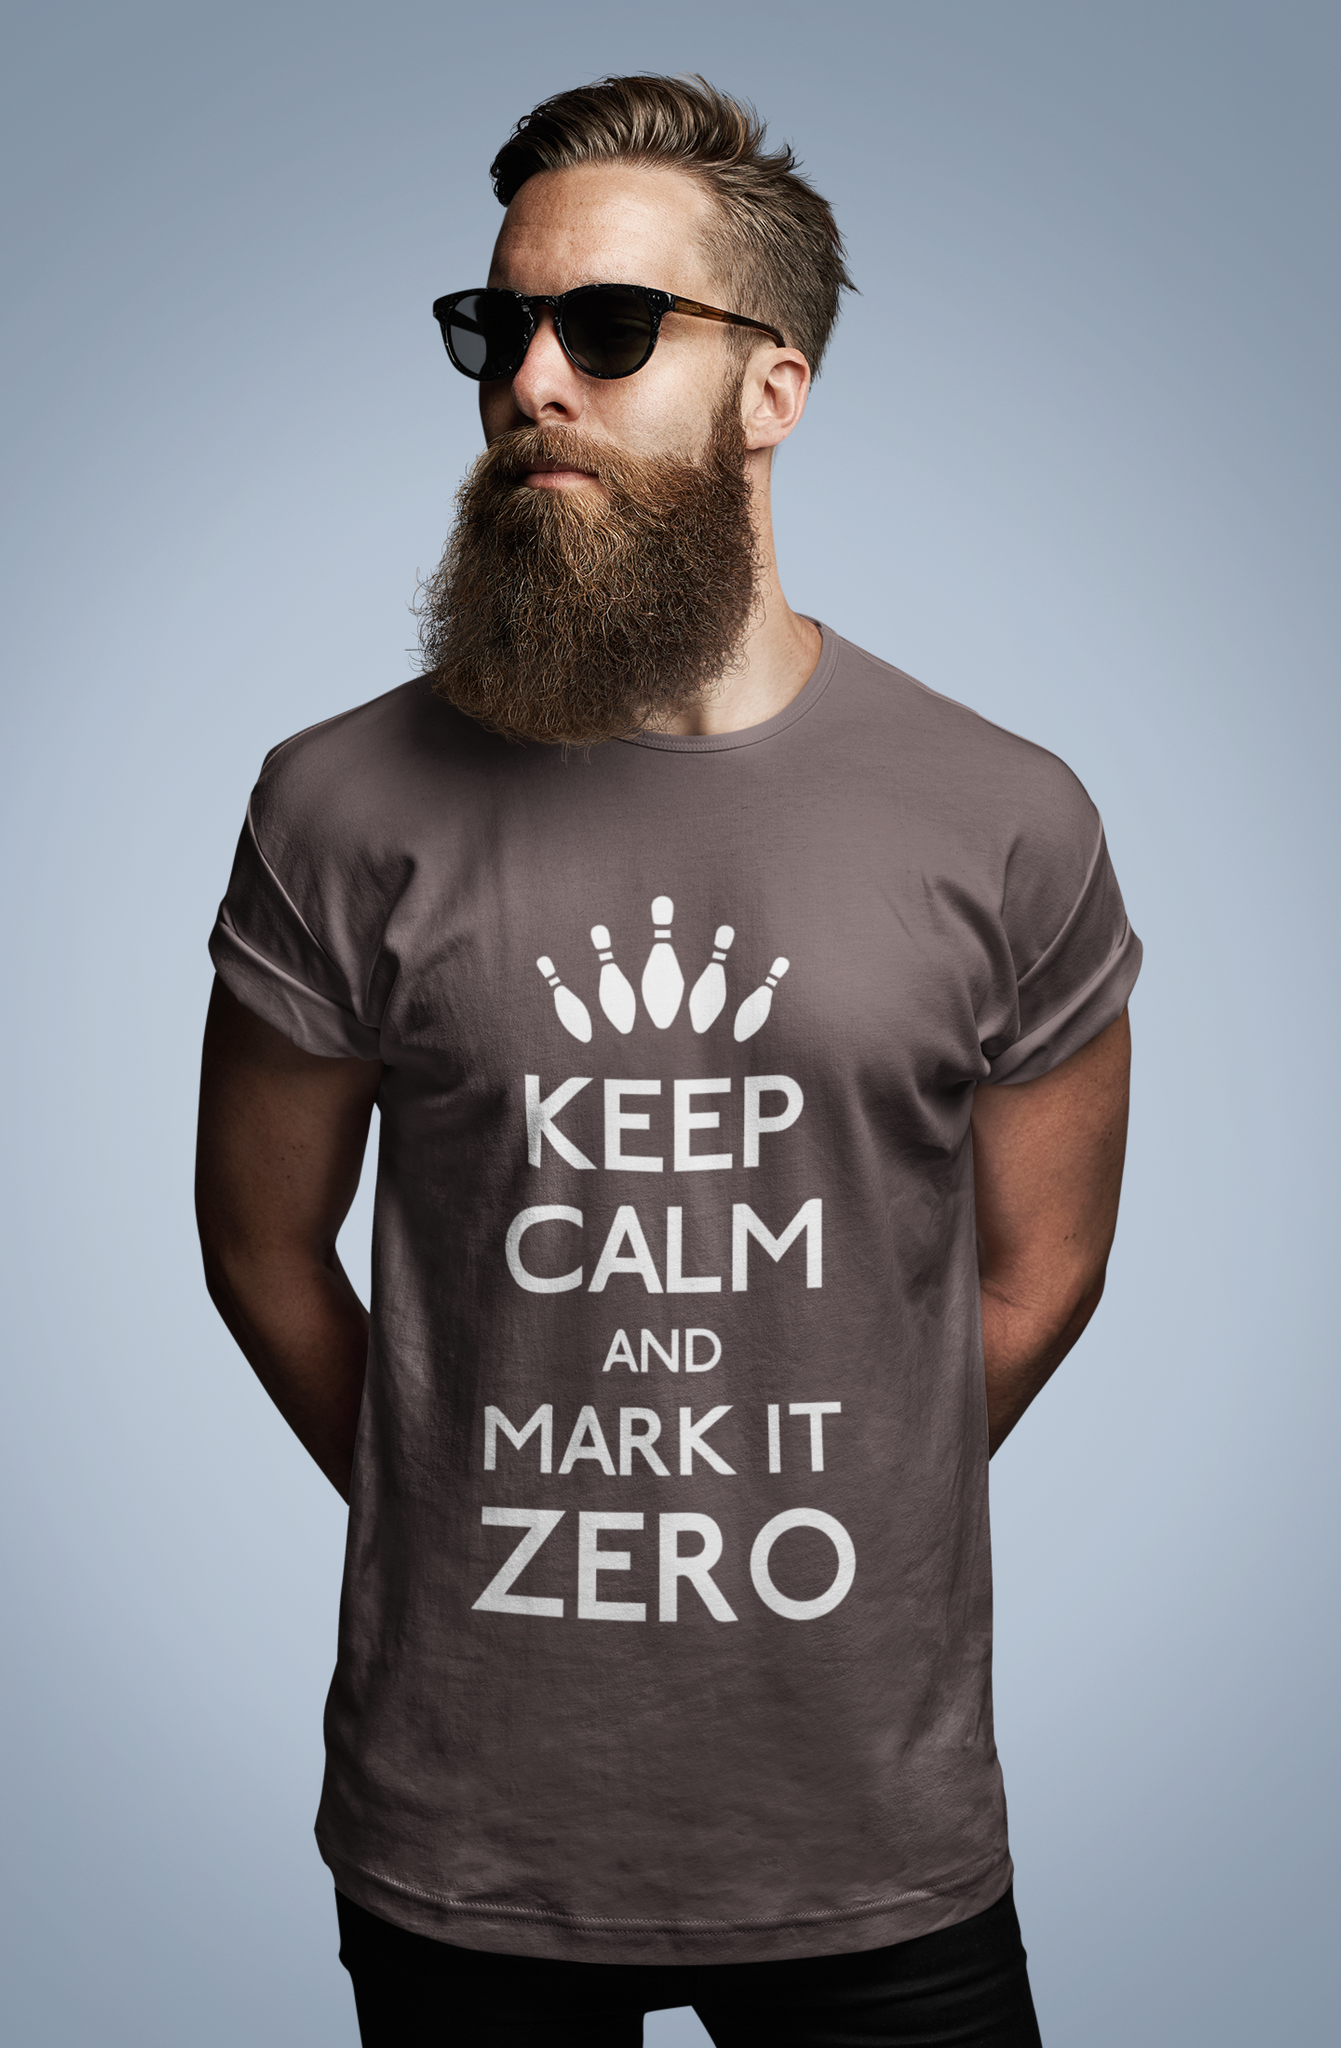 The Big Lebowski T Shirt, Walter Sobchak T Shirt, Keep Calm And Mark It Zero Tshirt